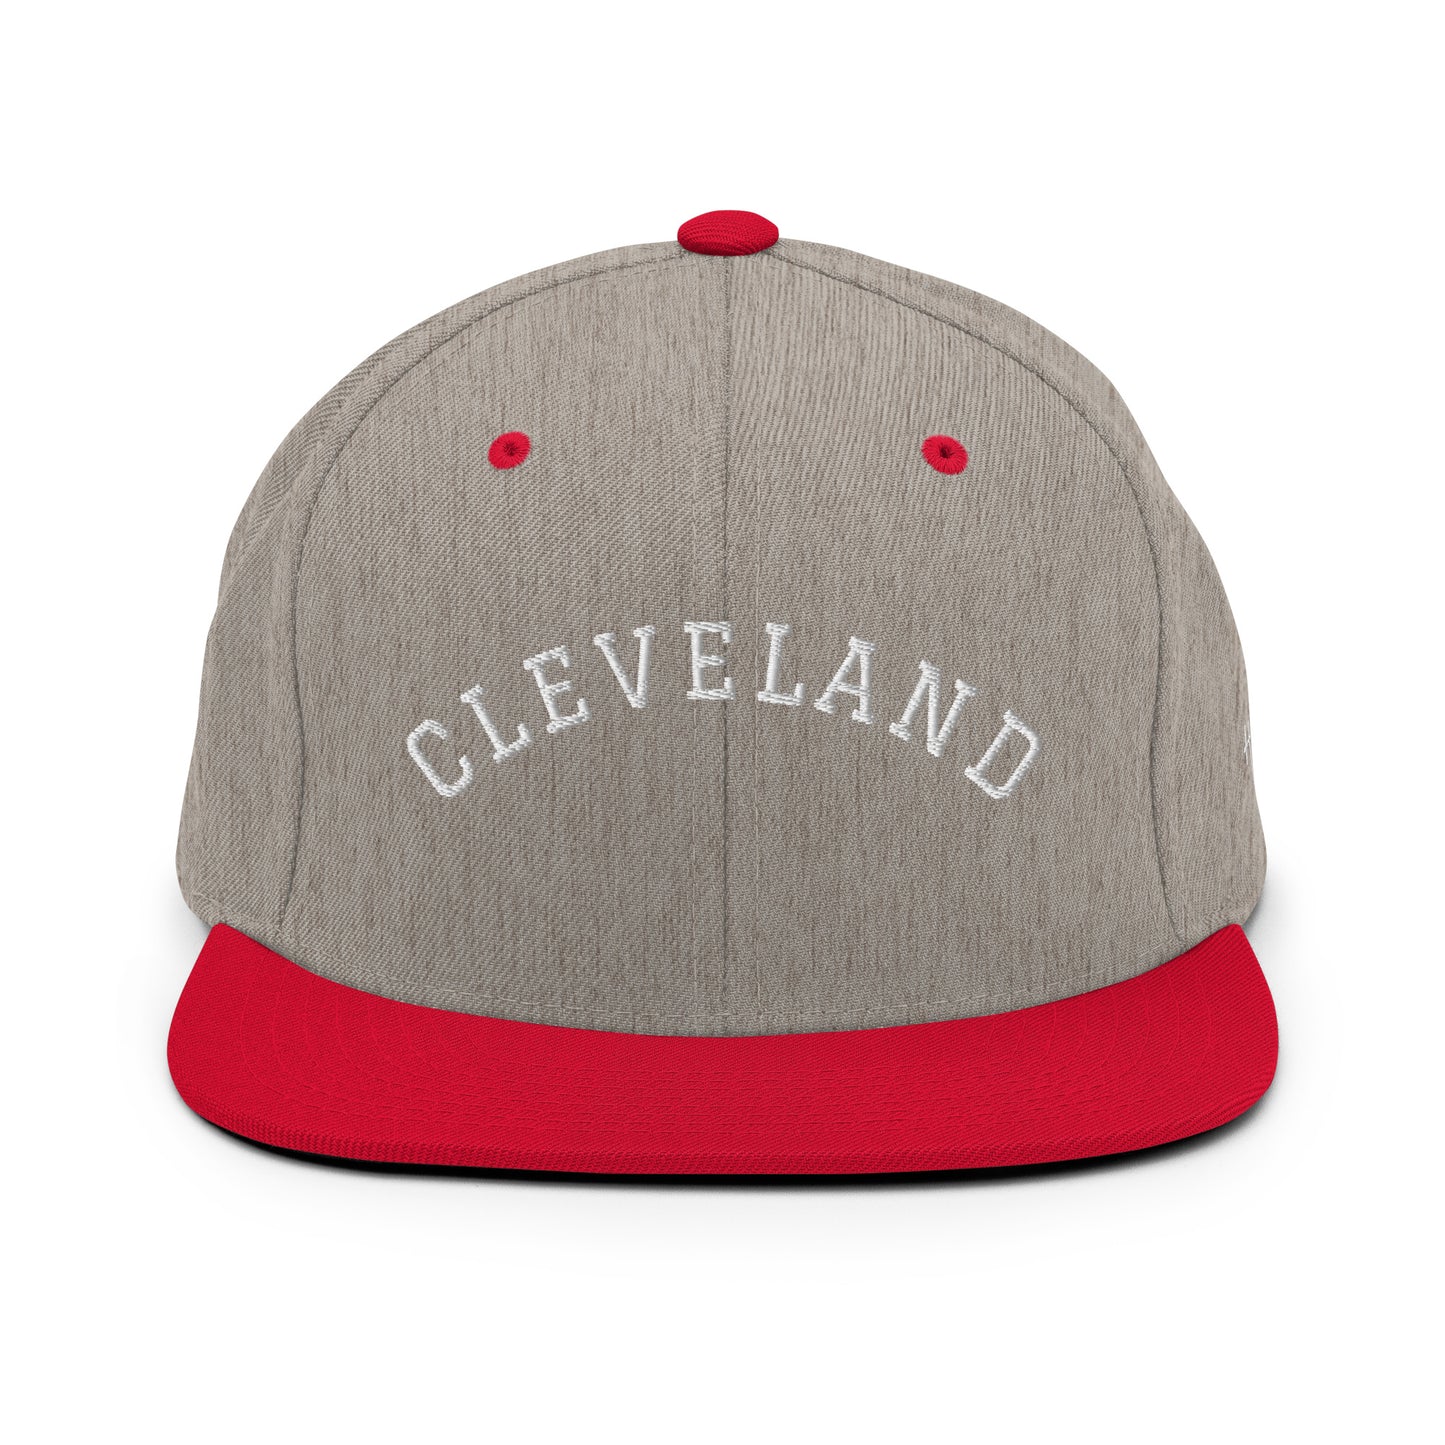 Cleveland Arch 6 Panel Snapback Hat